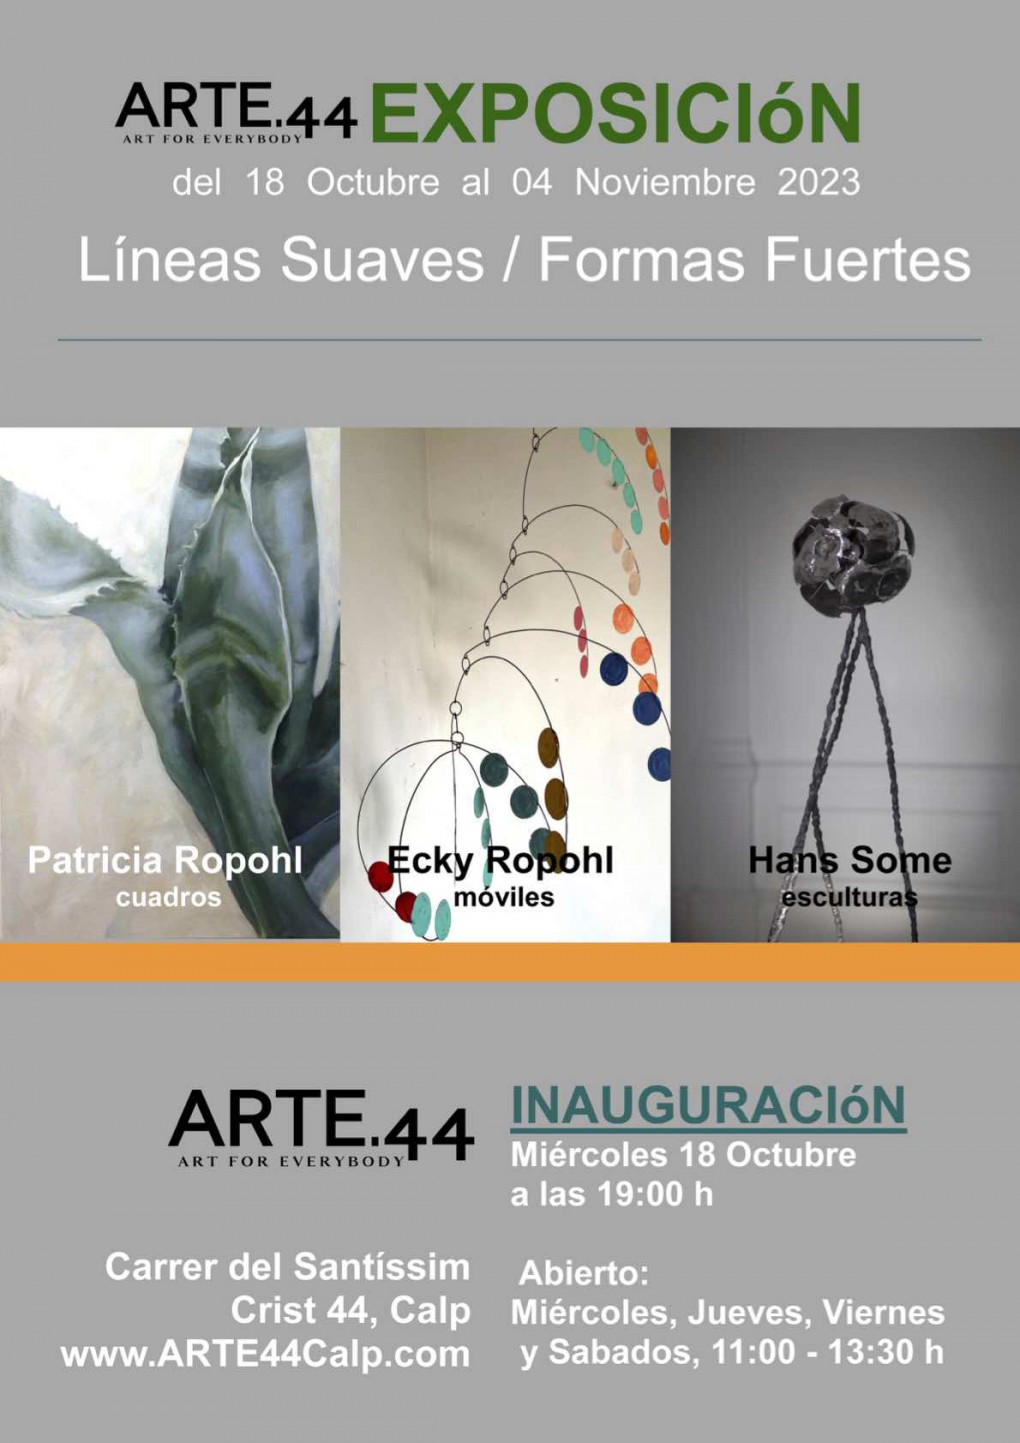 Invitacion Lineas Suaves-Formas Fuertes, exposicion @ Arte.44, Calpe/Spain, Hans Some, 2023 2023